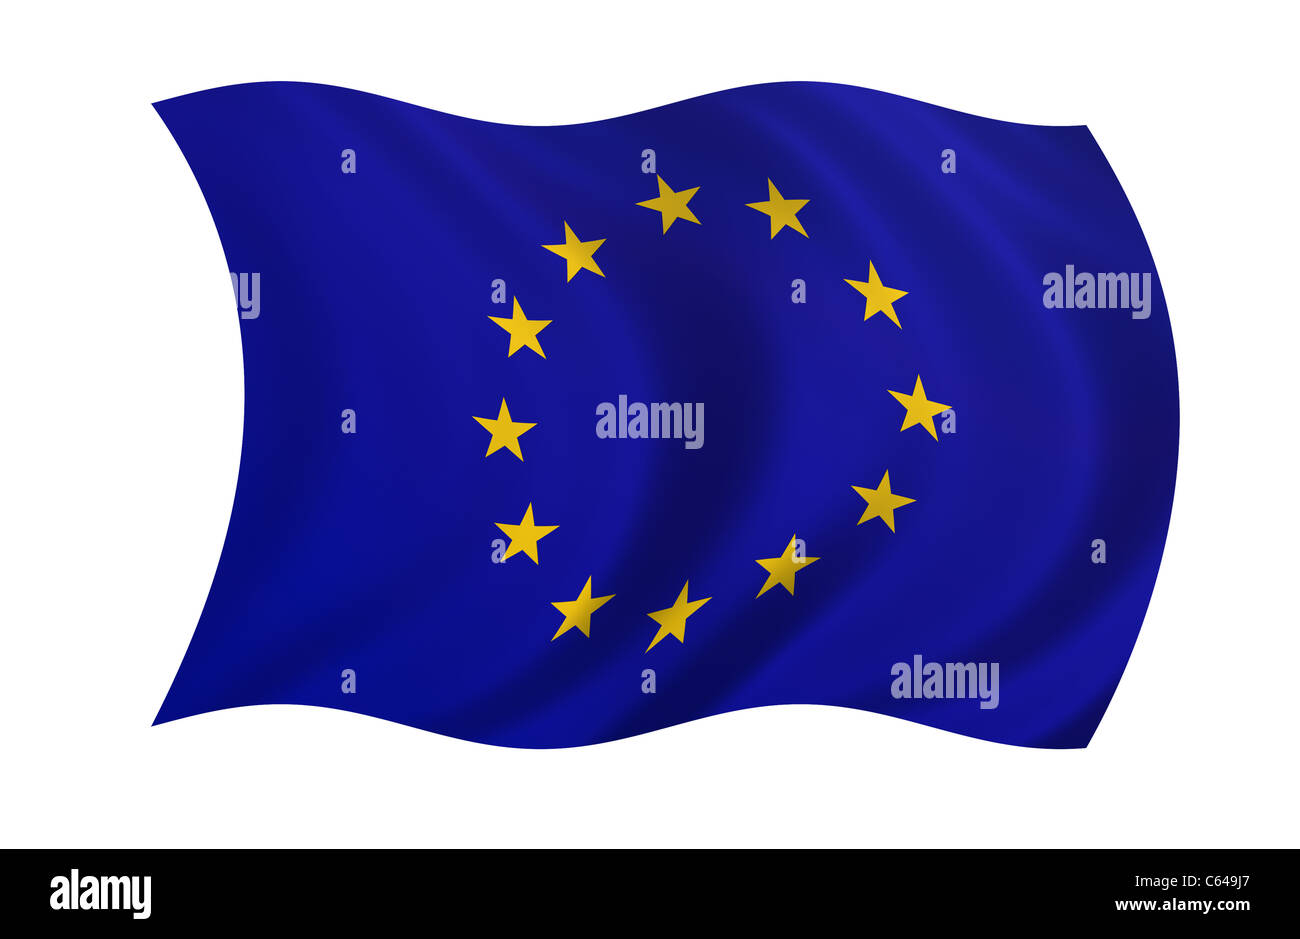 Europa flagge -Fotos und -Bildmaterial in hoher Auflösung – Alamy